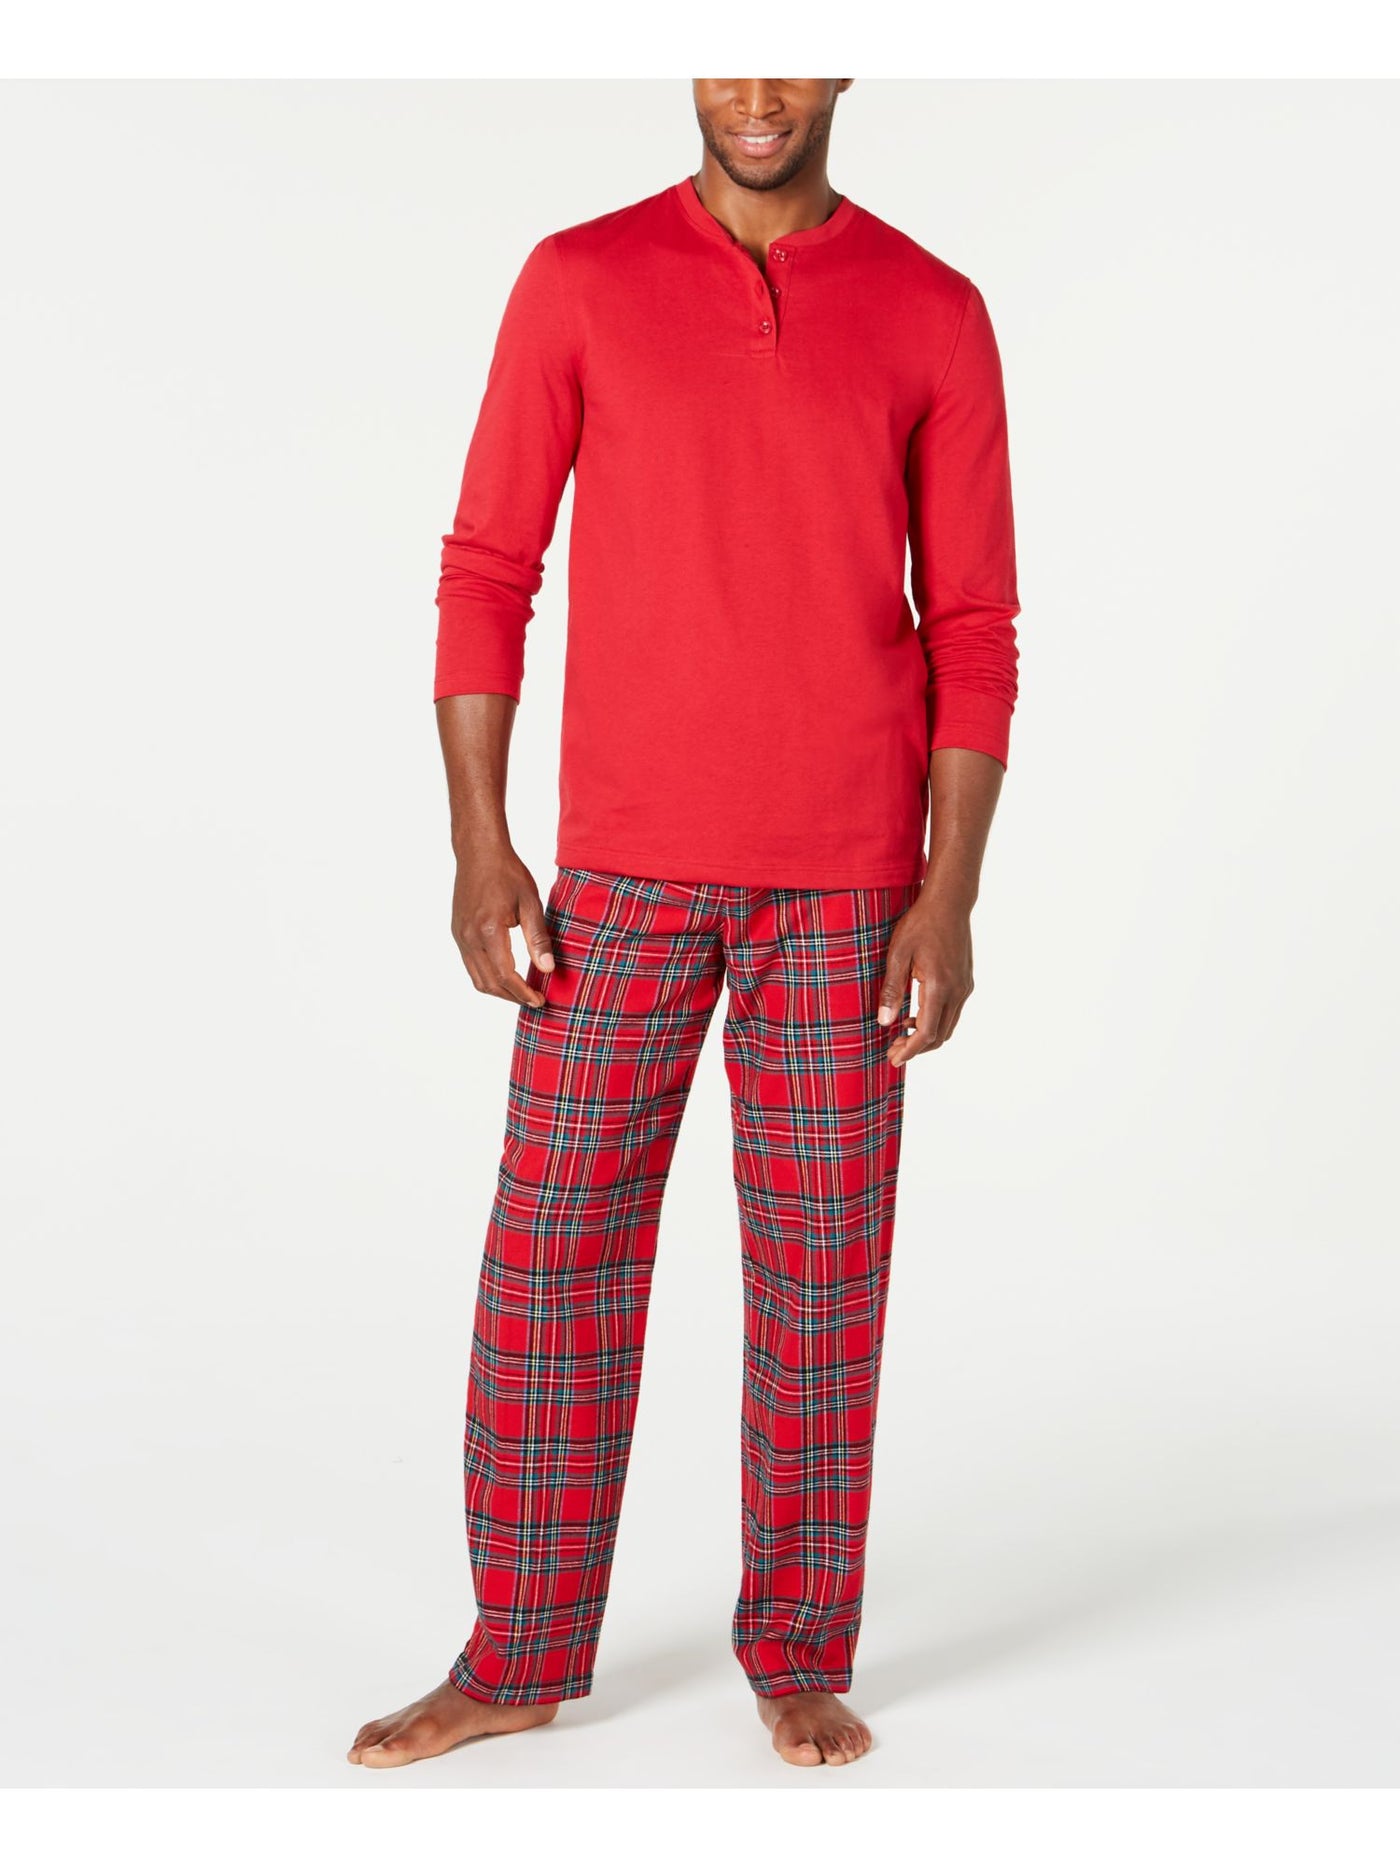 FAMILY PJs Mens Red Elastic Band T-Shirt Top Straight leg Pants Pajamas XL